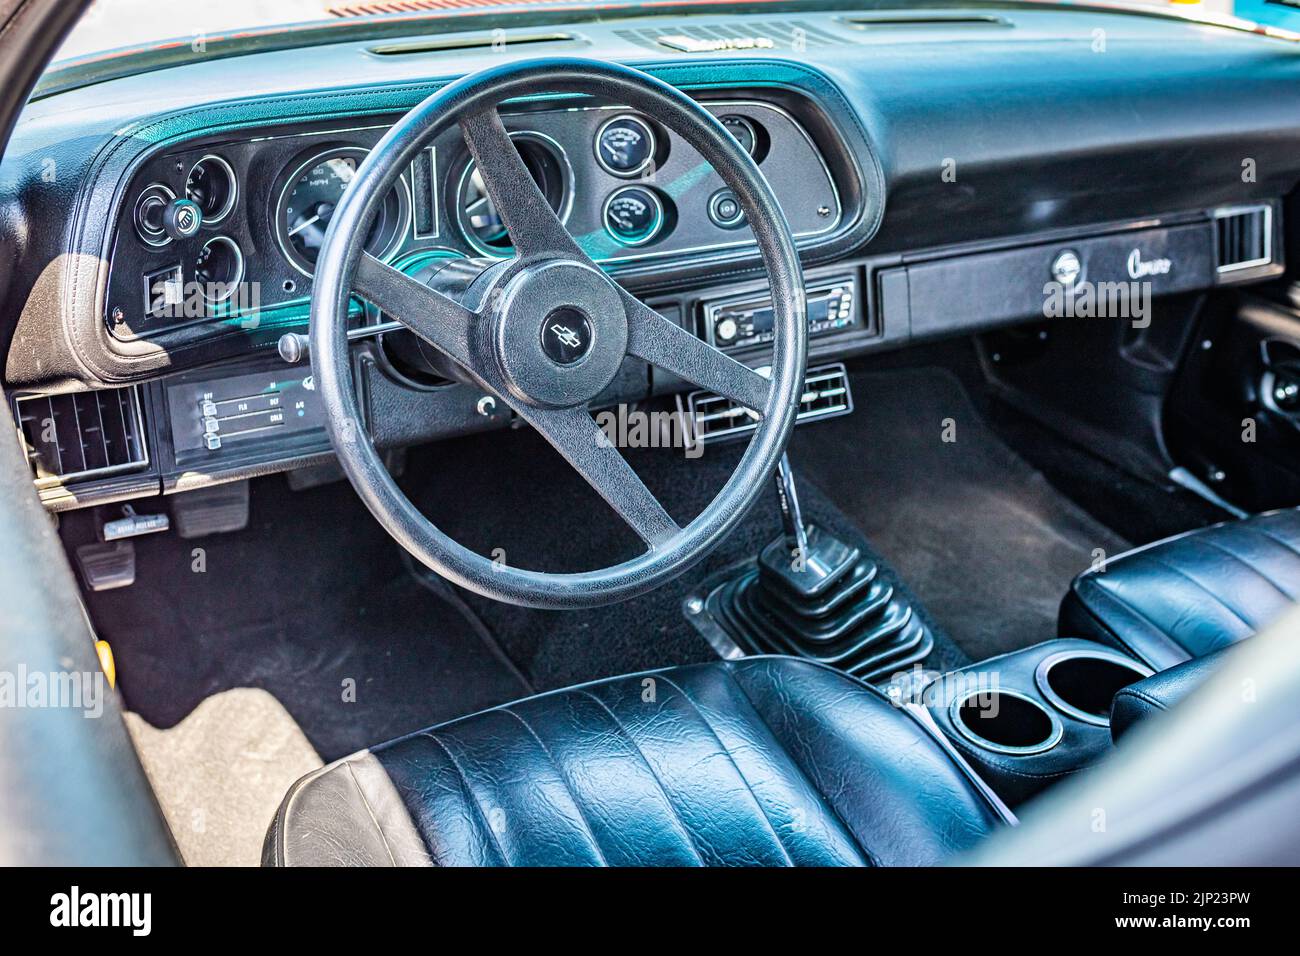 Details more than 108 camaro 69 interior best